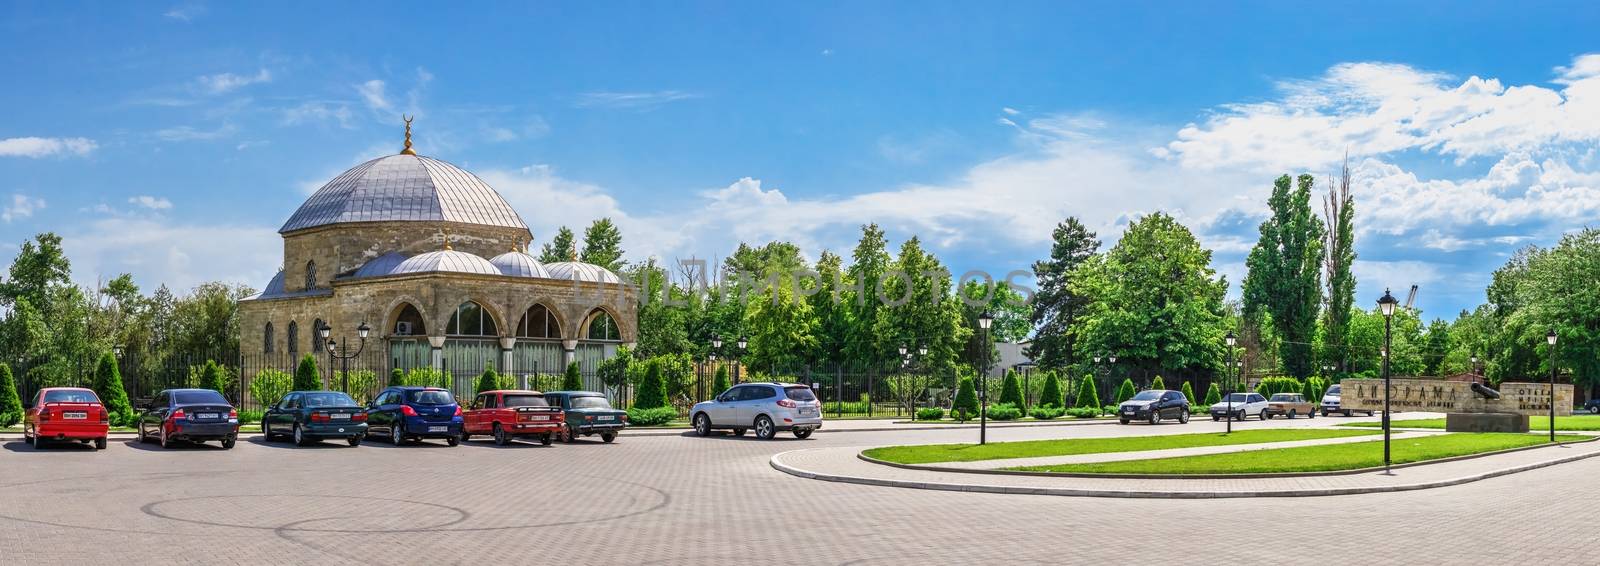 Izmail, Ukraine 06.07.2020. Memorial park in the city of Izmail, Ukraine, on a sunny summer day